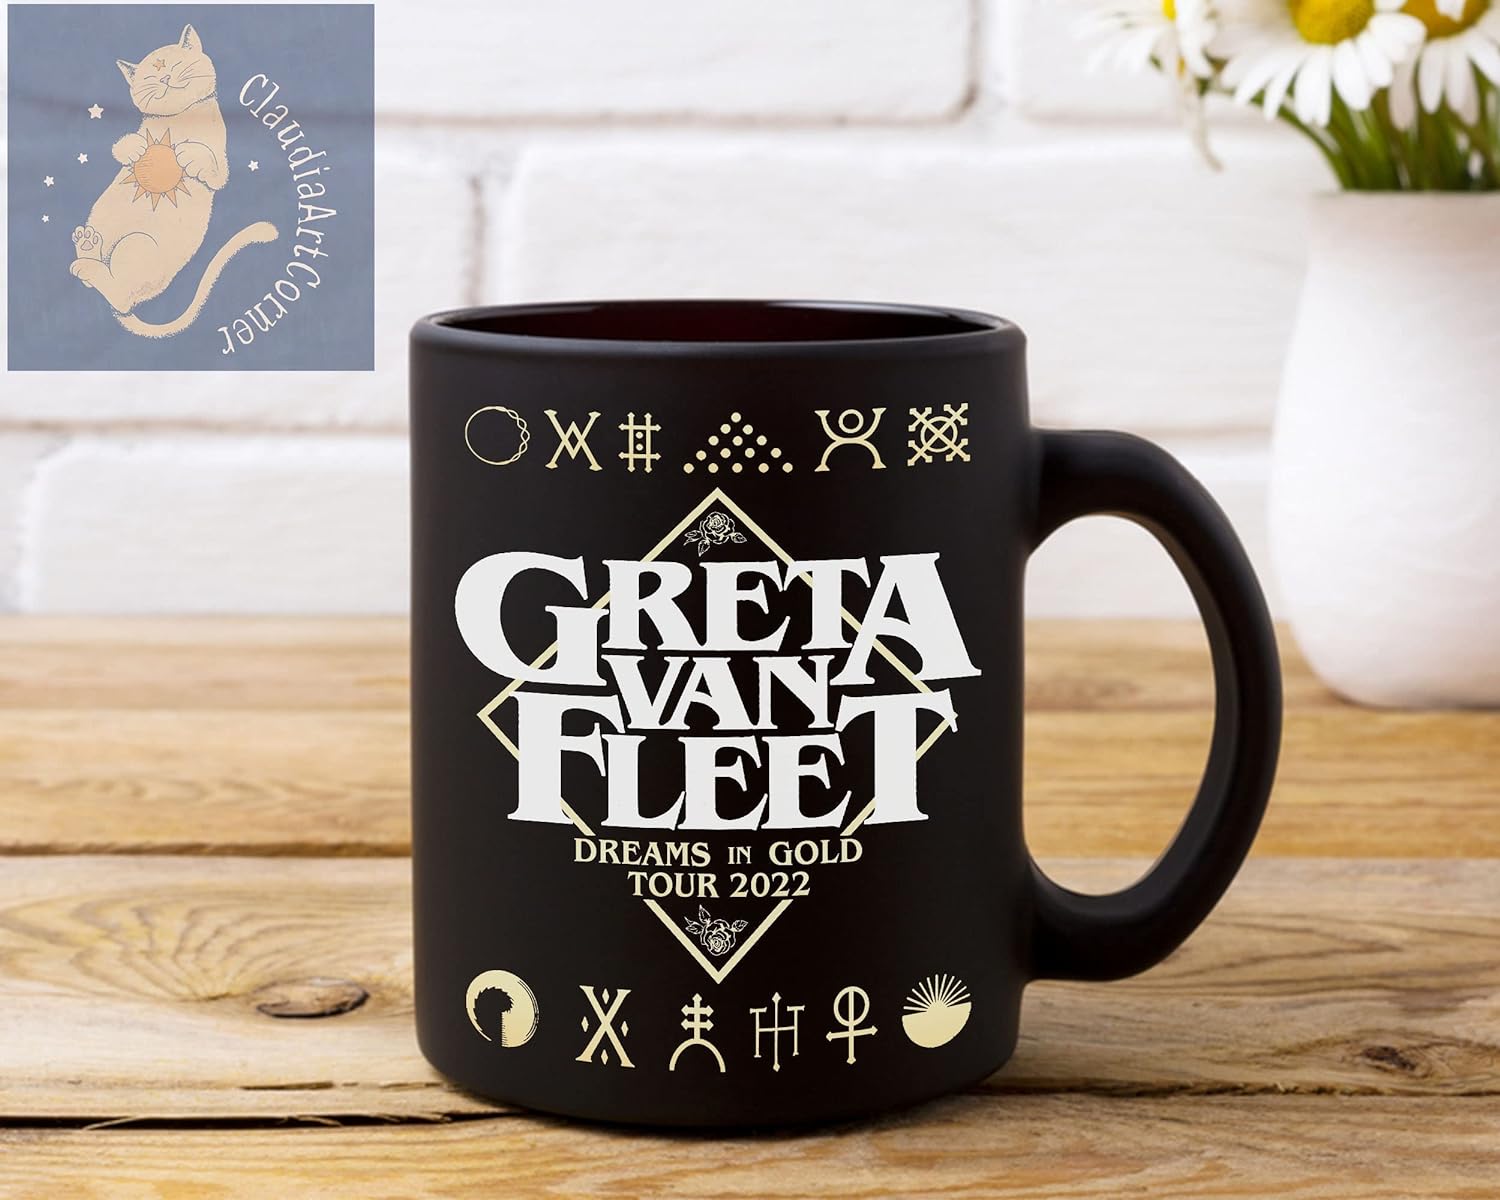 Salem Store Greta Van Fleet Dreams in Gold Coffee Mug Greta Van Fleet Mug Dreams in Gold Mug Dreams in Gold Tour 2022 Mug White 15oz